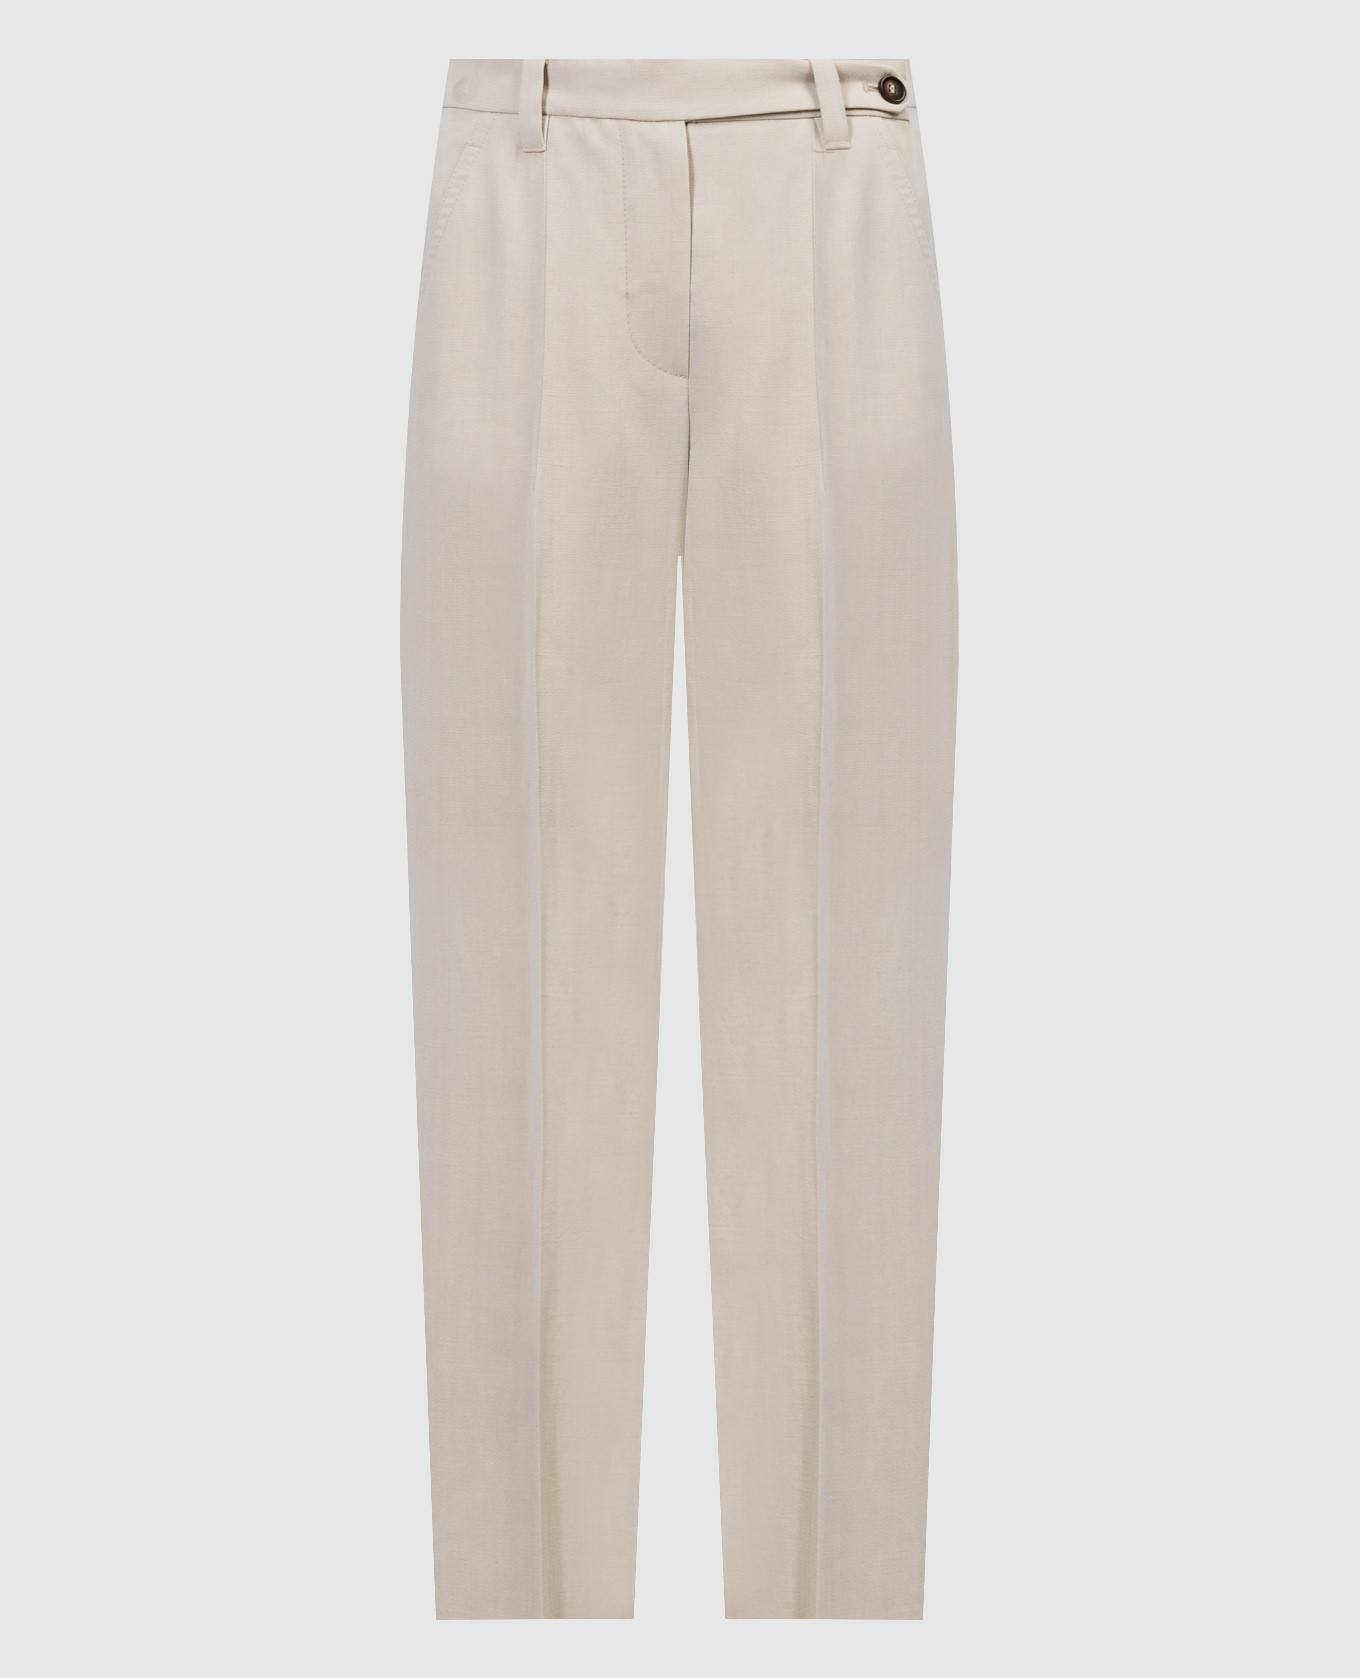 Beige linen trousers with monil ecolathoon chain